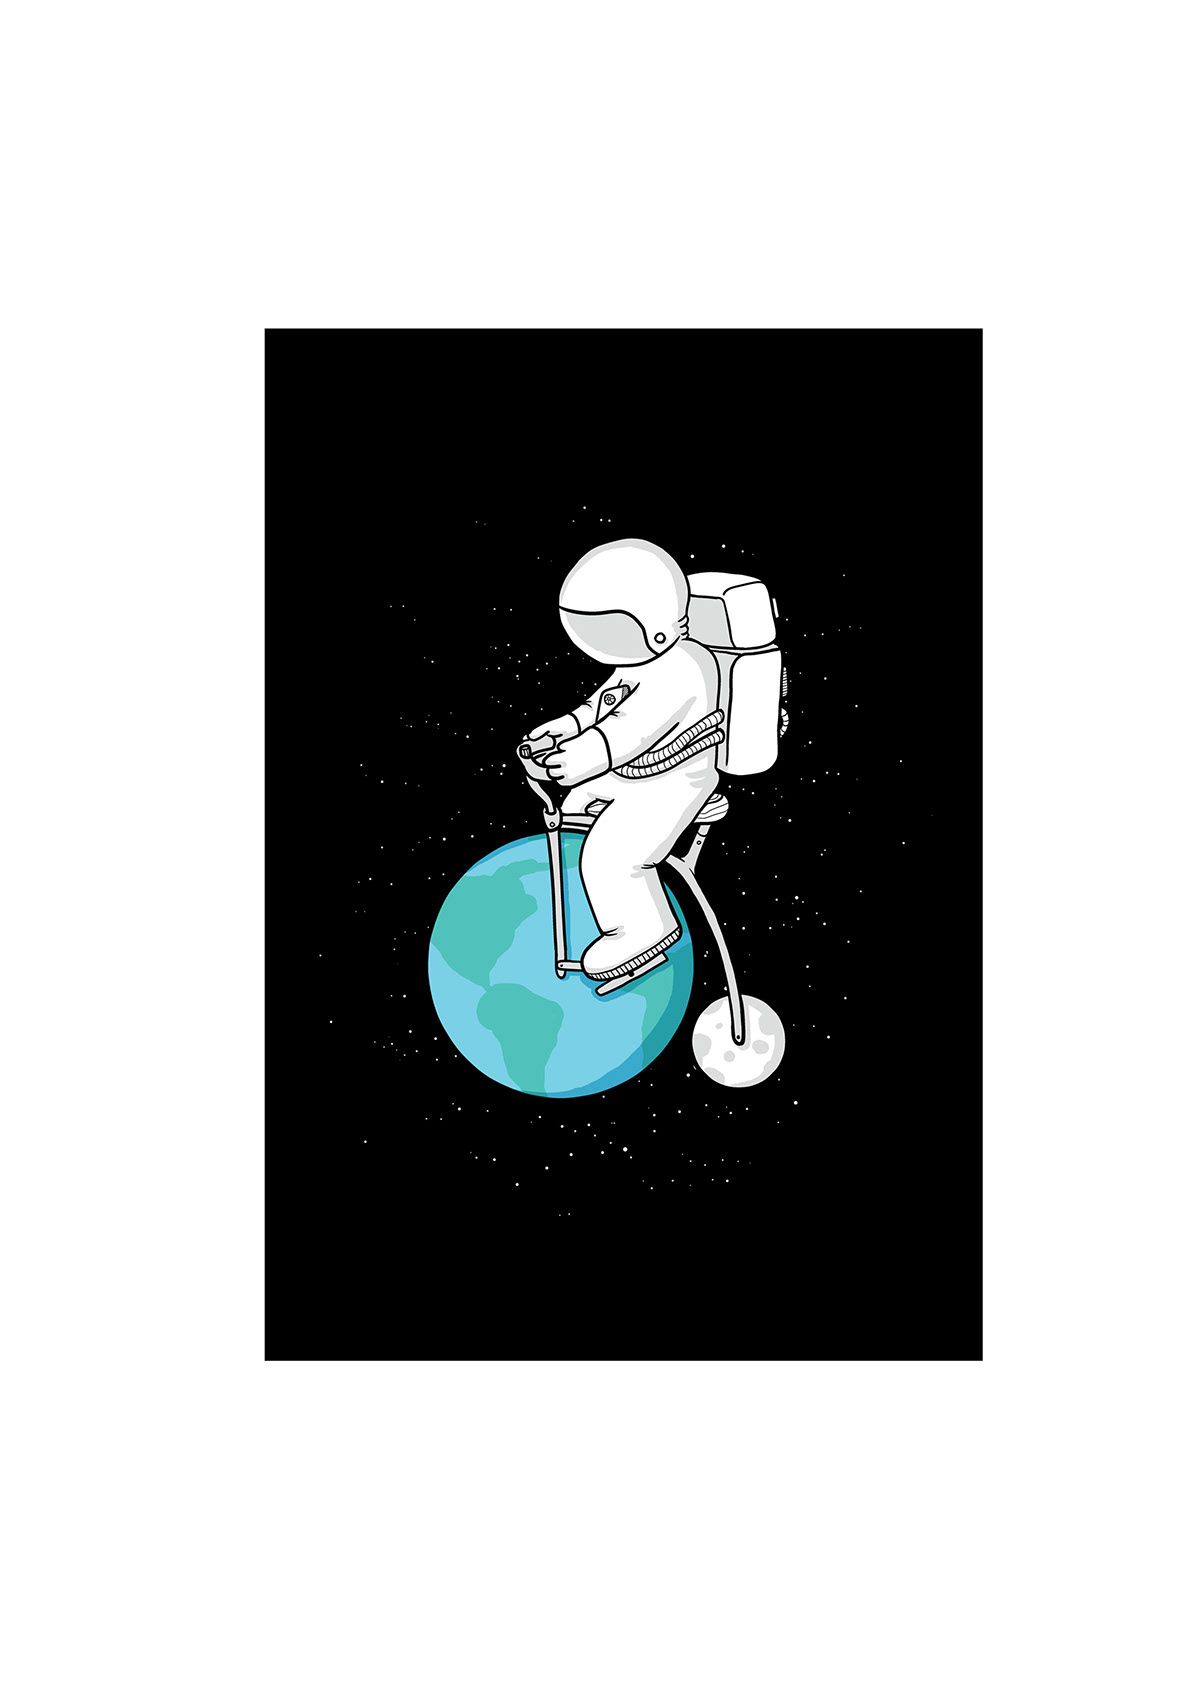 süt kardeşler louis vitton Space  astronaut Bicycle penny farting